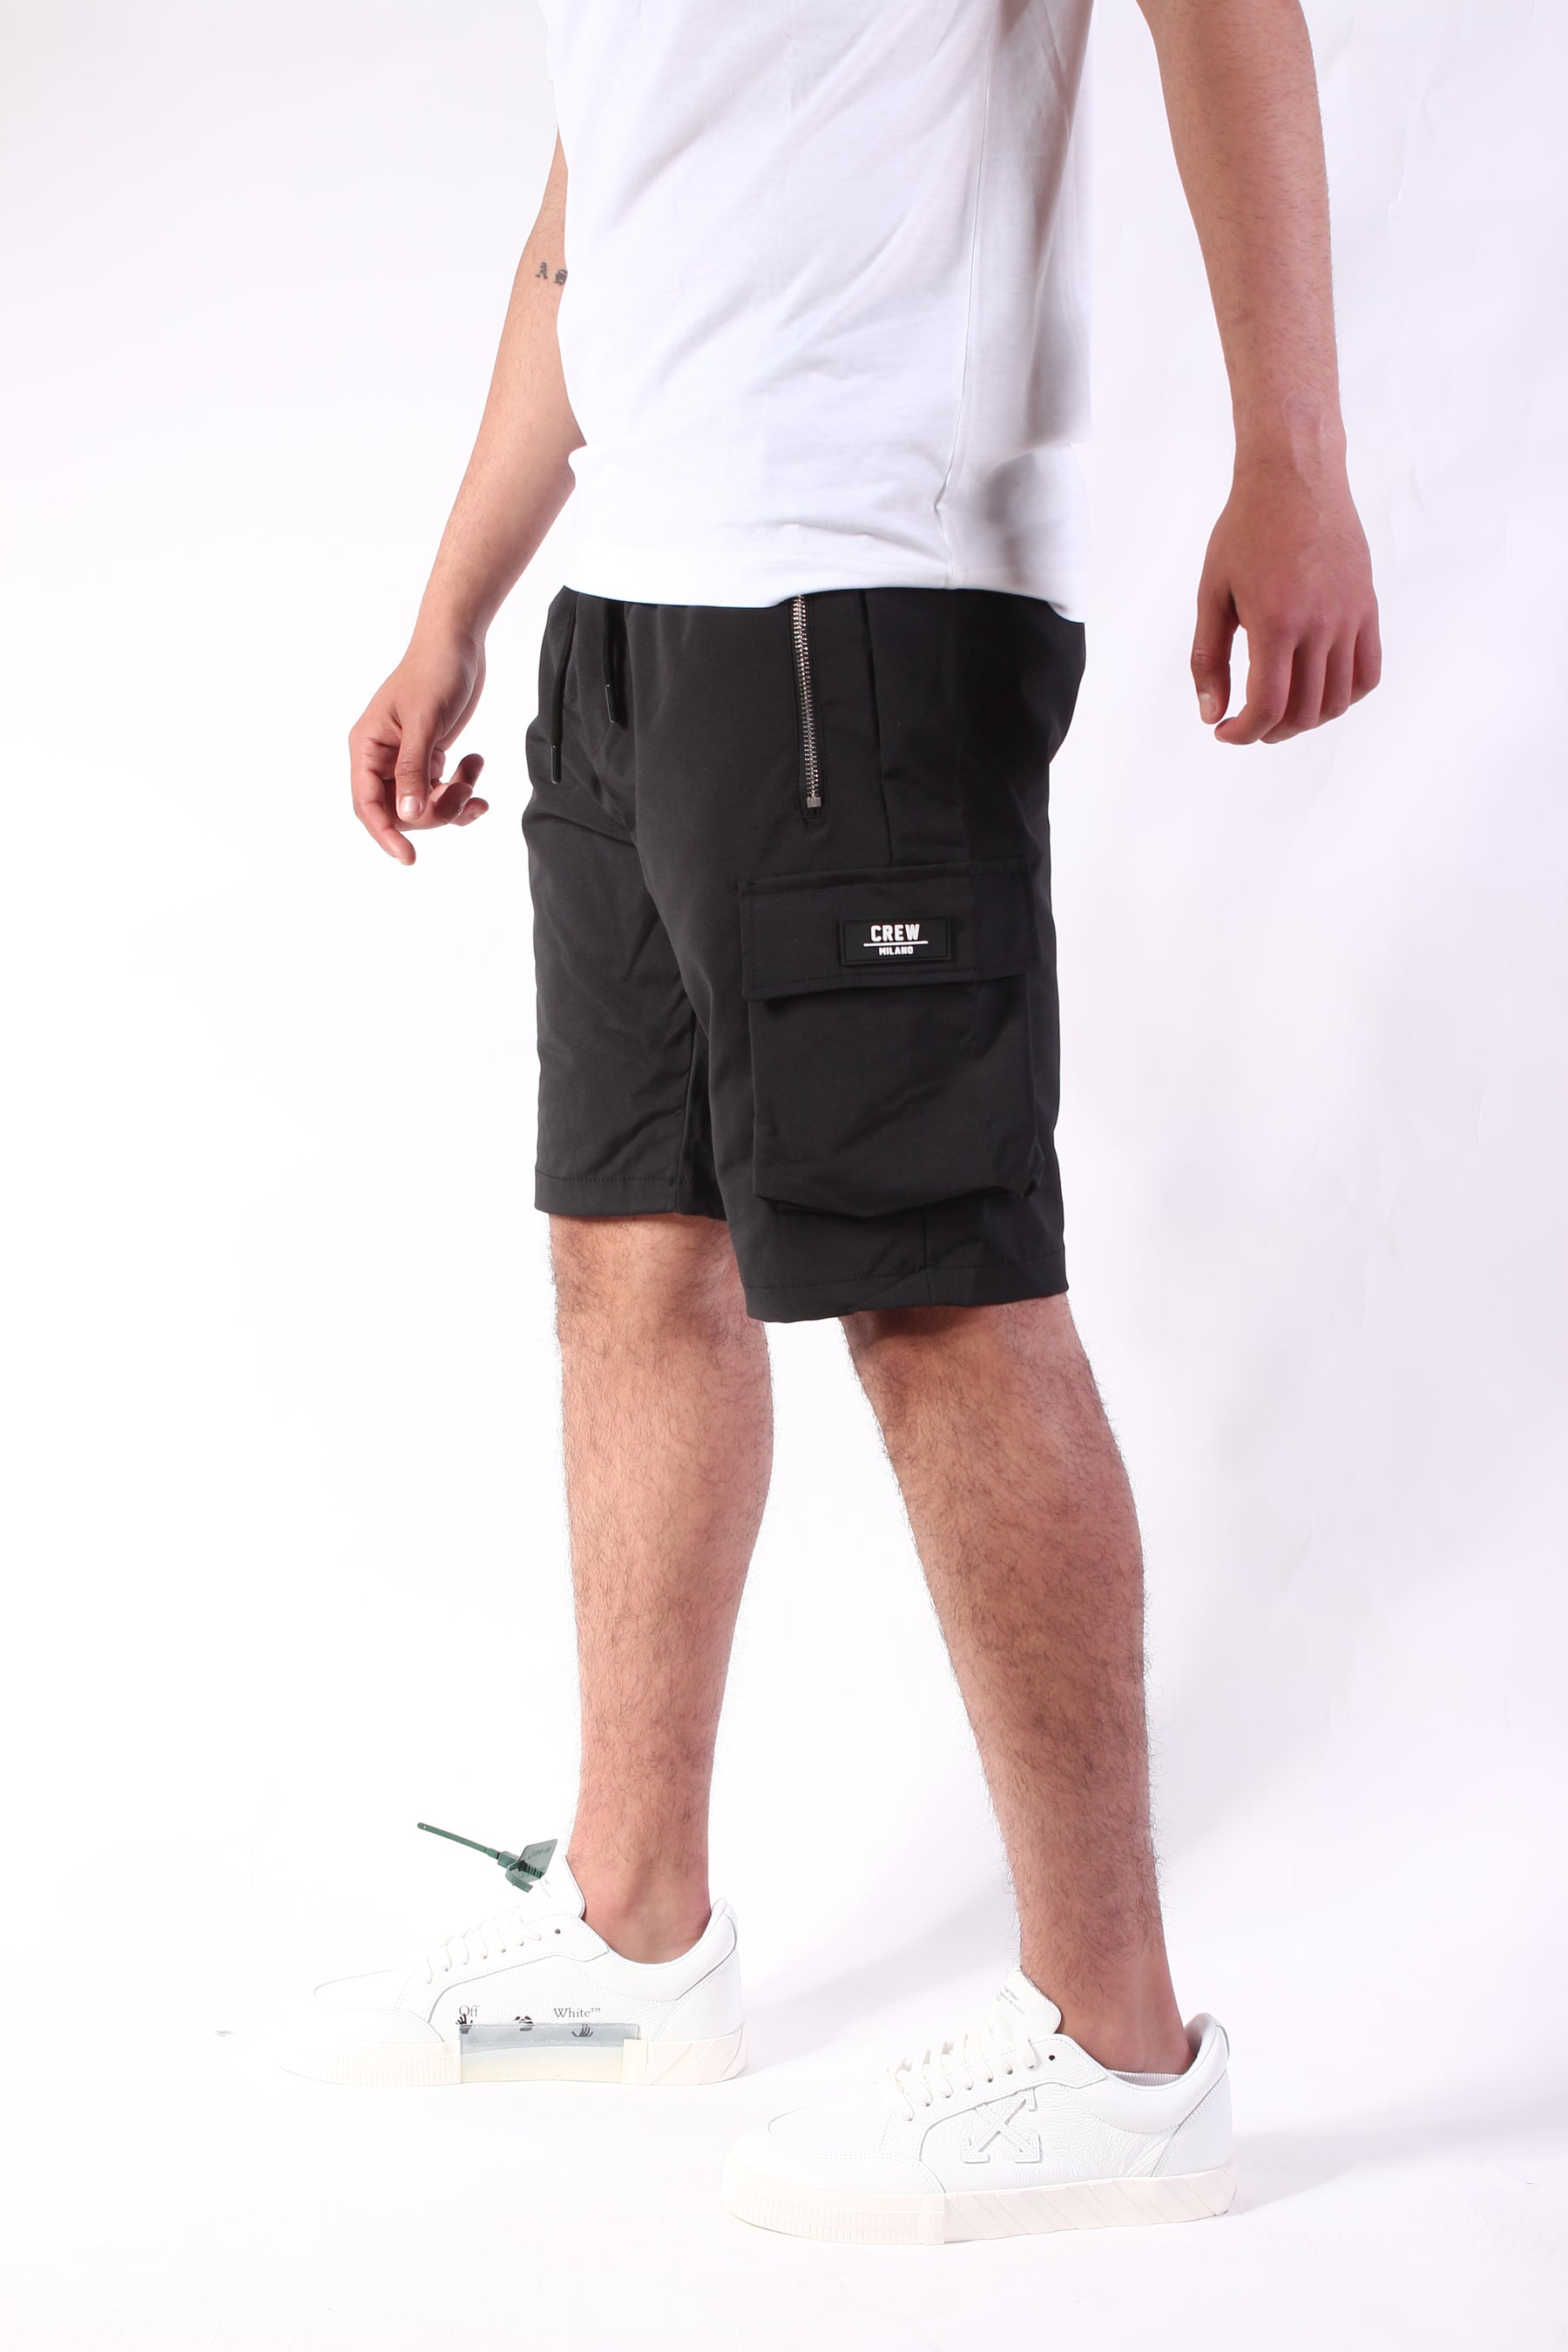 Crew Black Short Cargo Pants Zipper Long Pocket